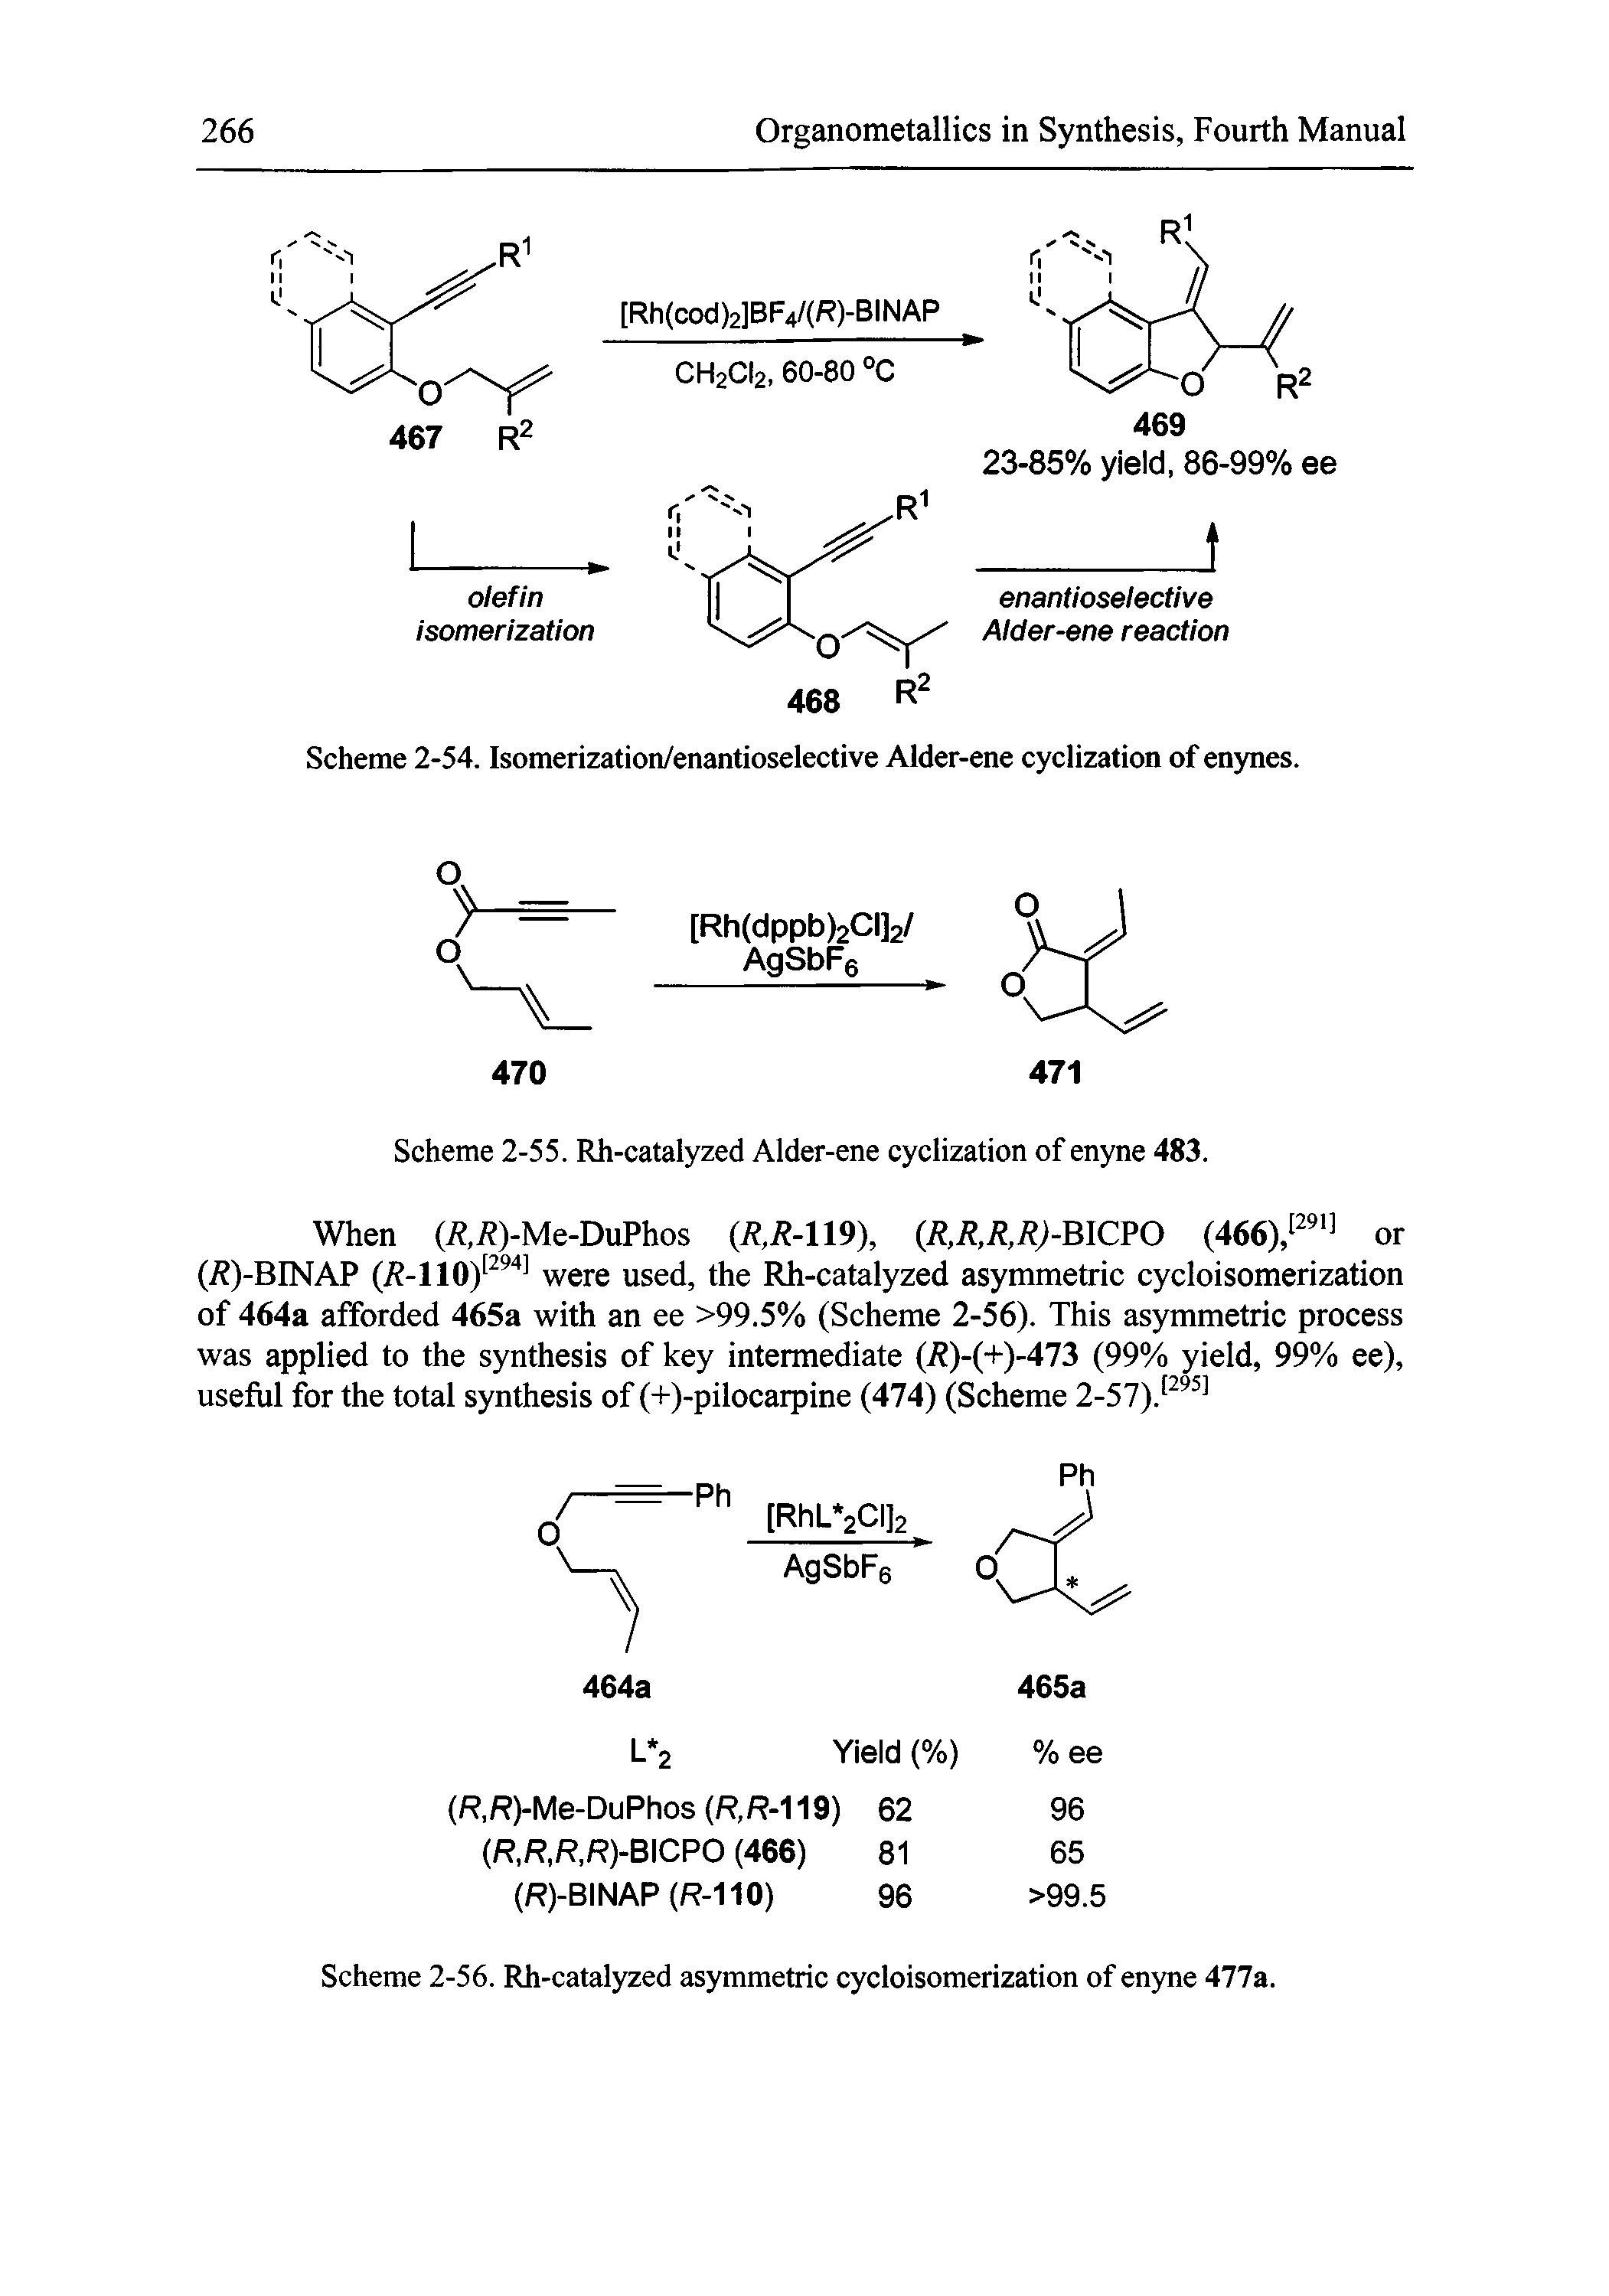 Scheme 2-56. Rh-catalyzed asymmetric cycloisomerization of enyne 477a.